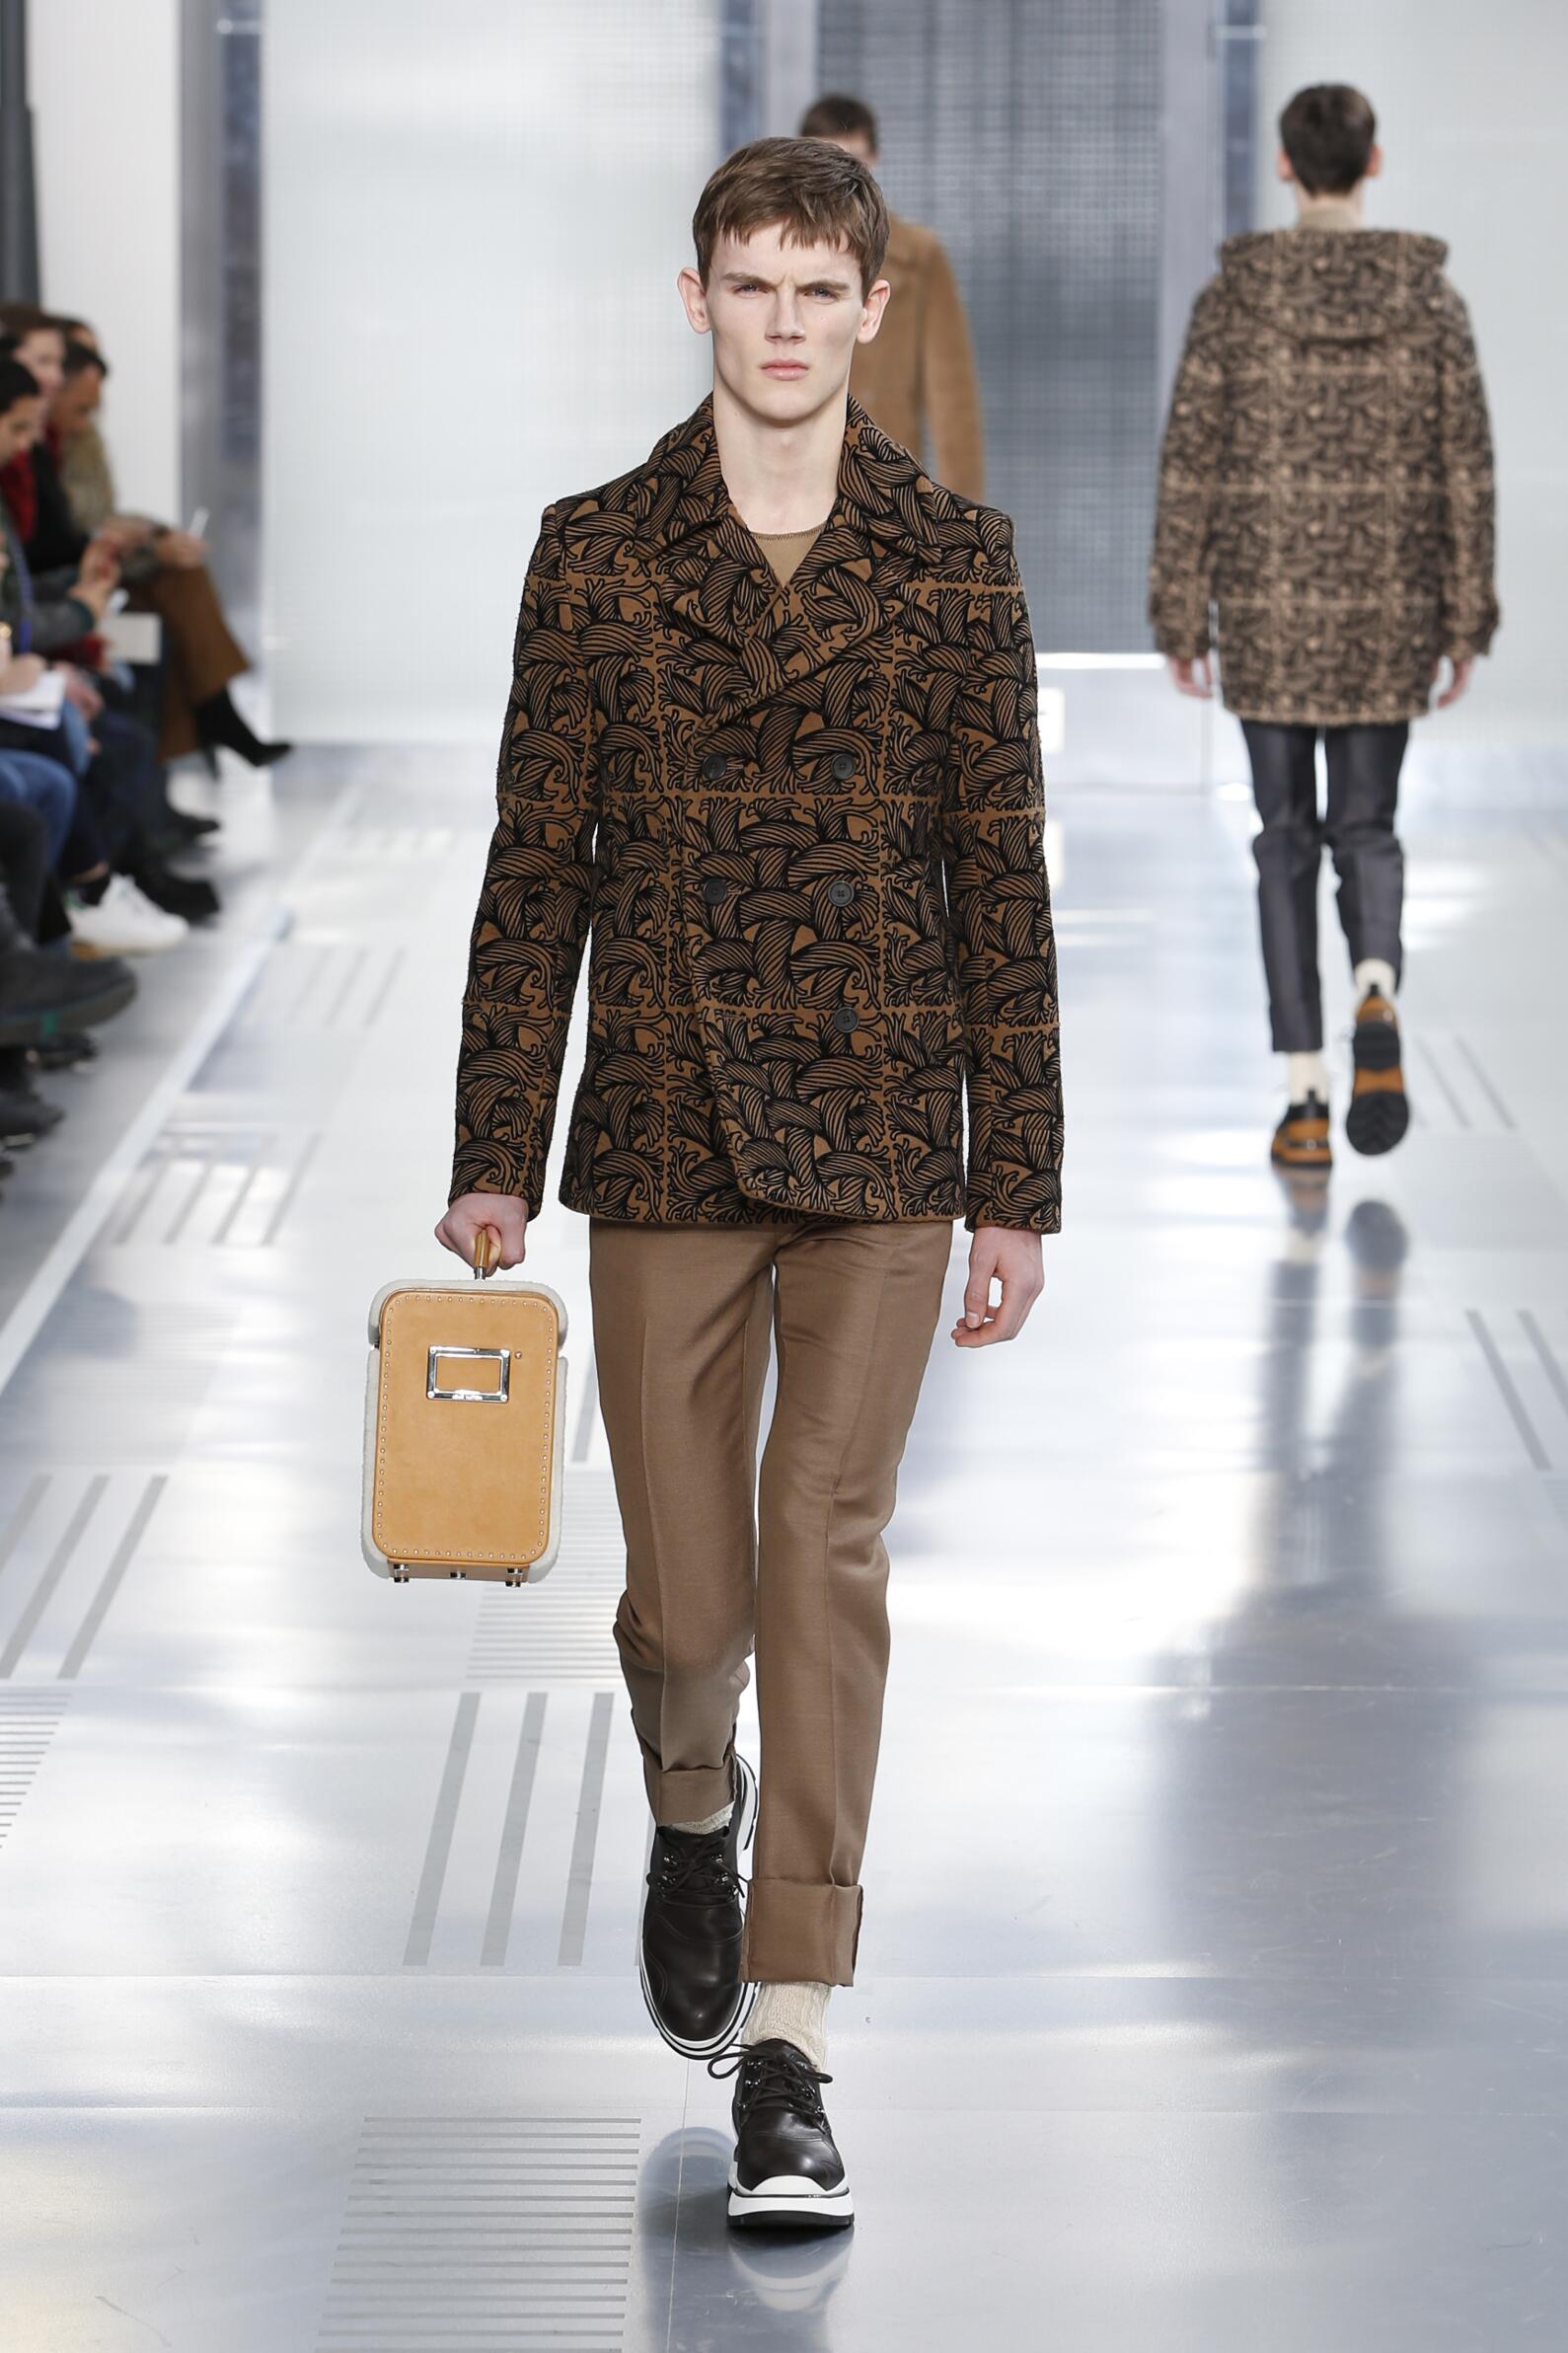 Louis Vuitton Menswear – Fall 2015 – Fashion Salad